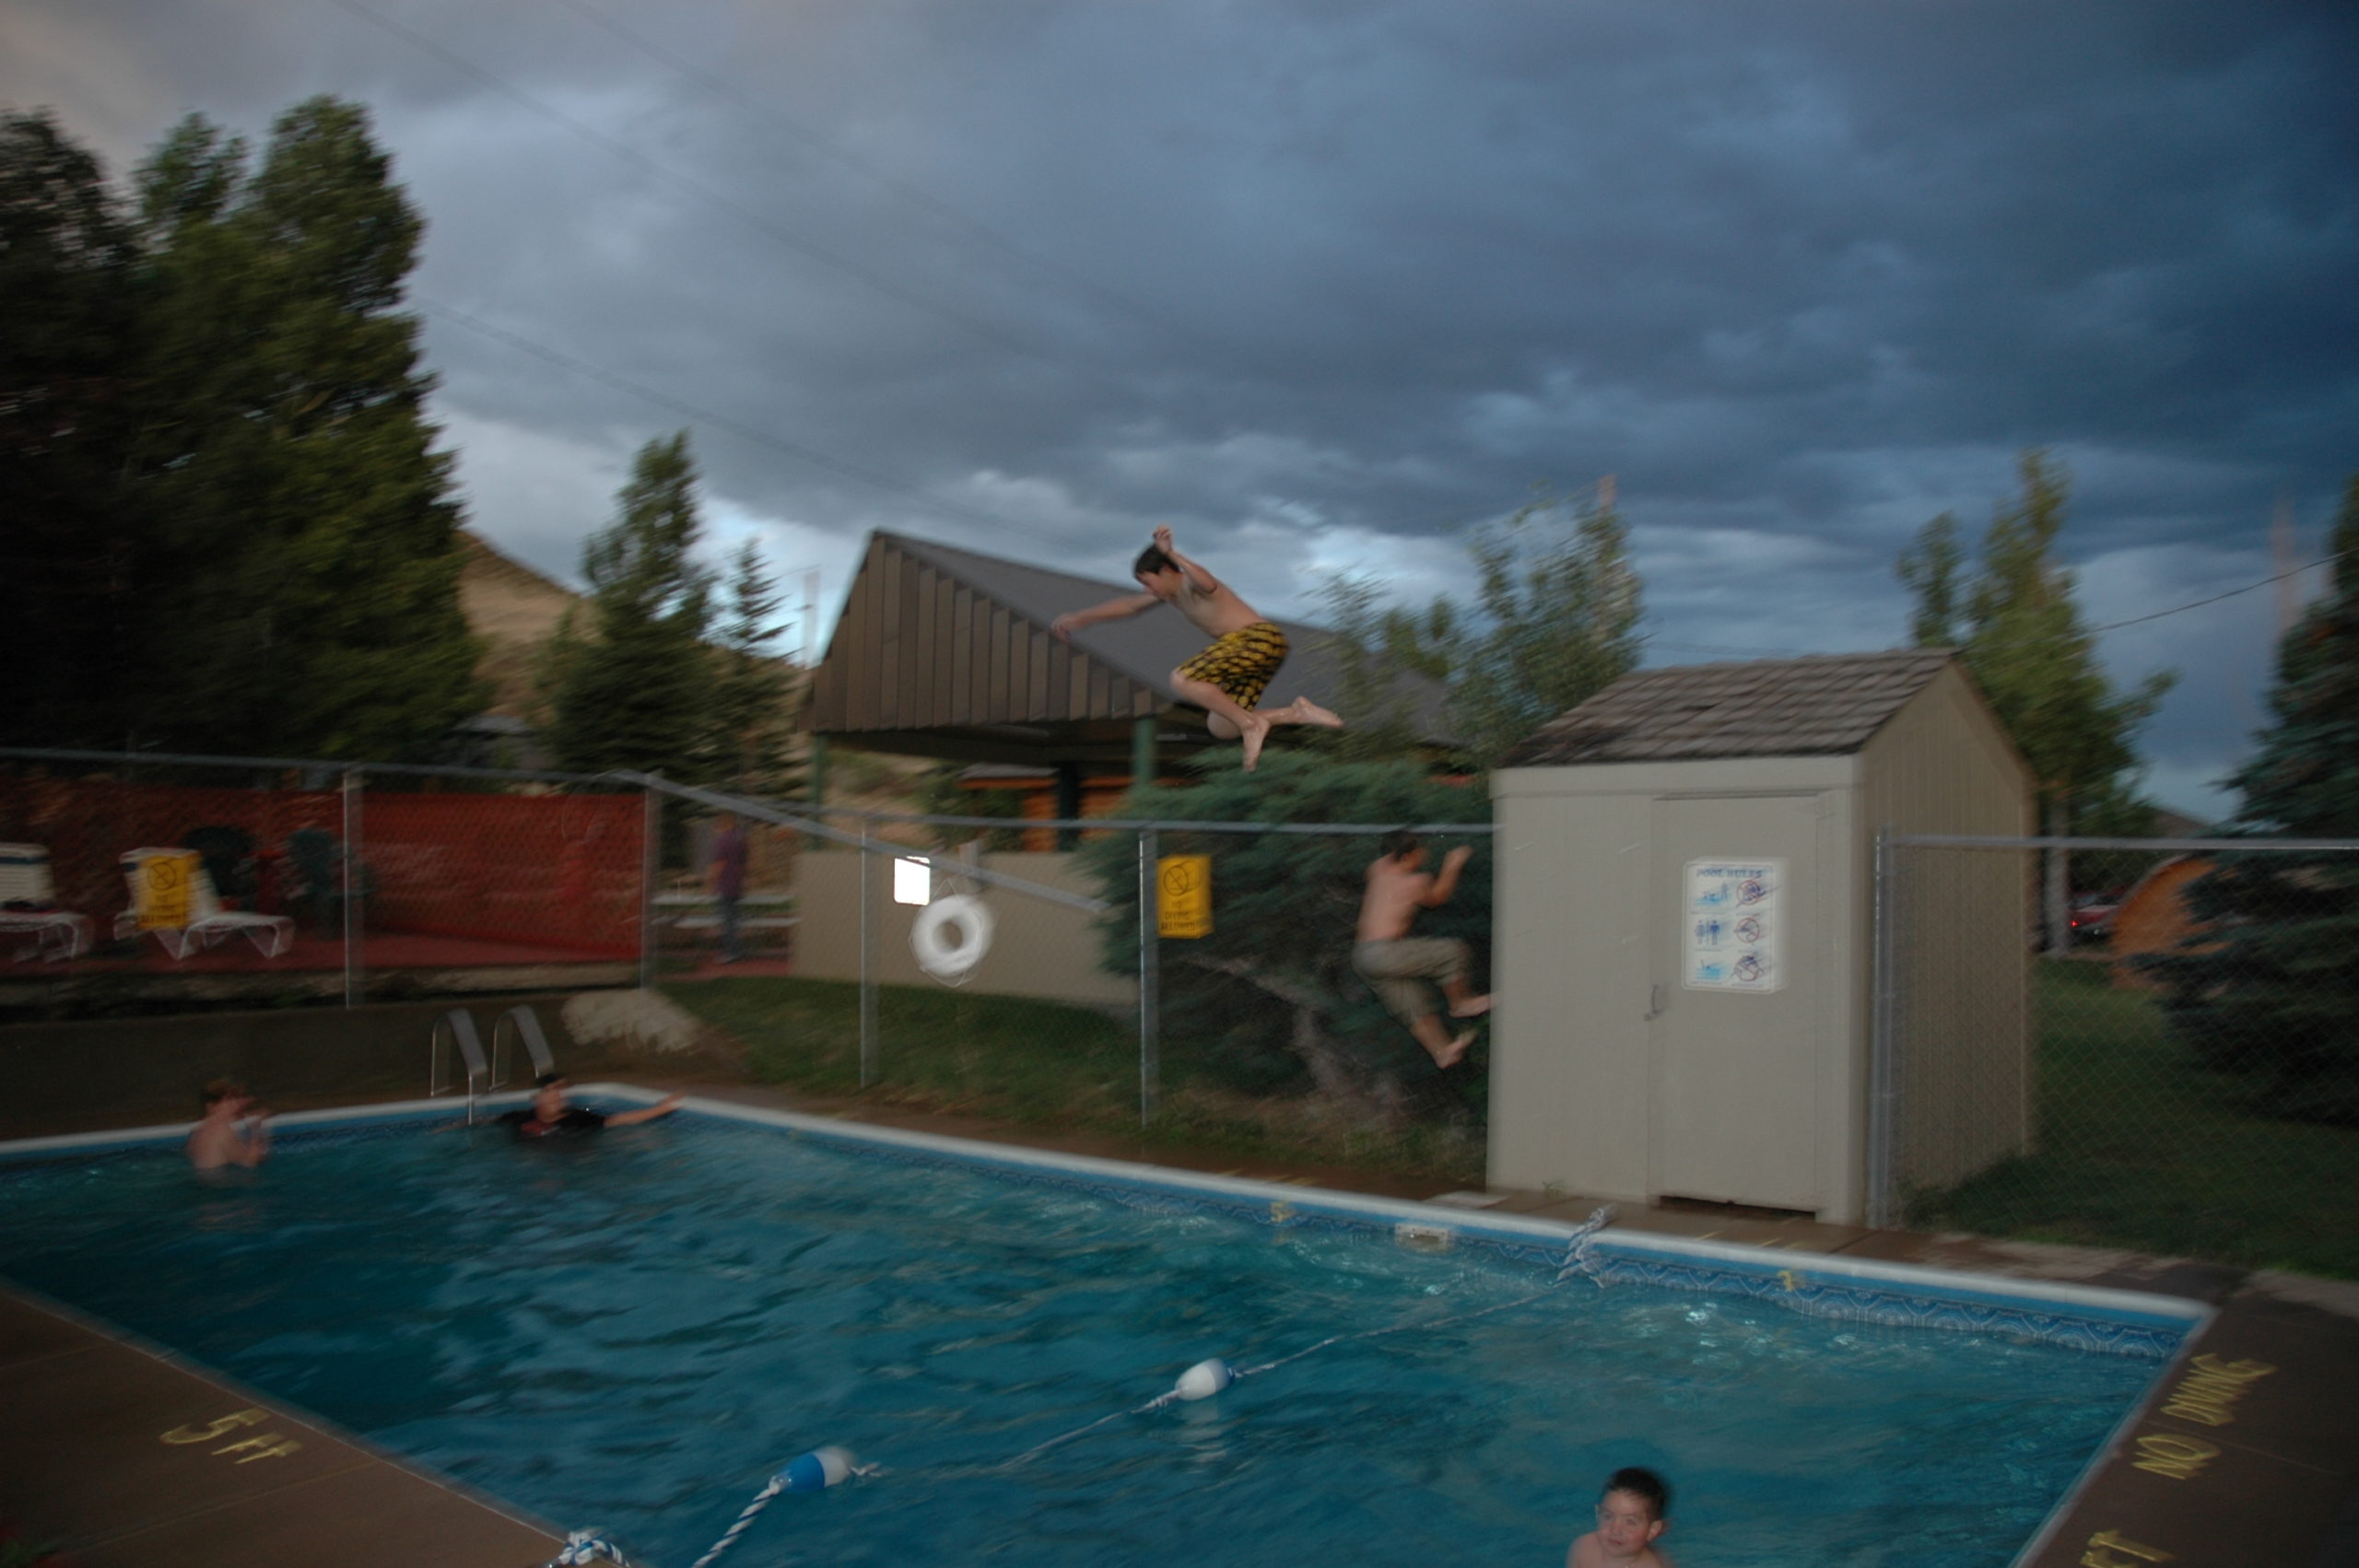 Northern Colorado Camping Trip - Shiloh Leader pool fun